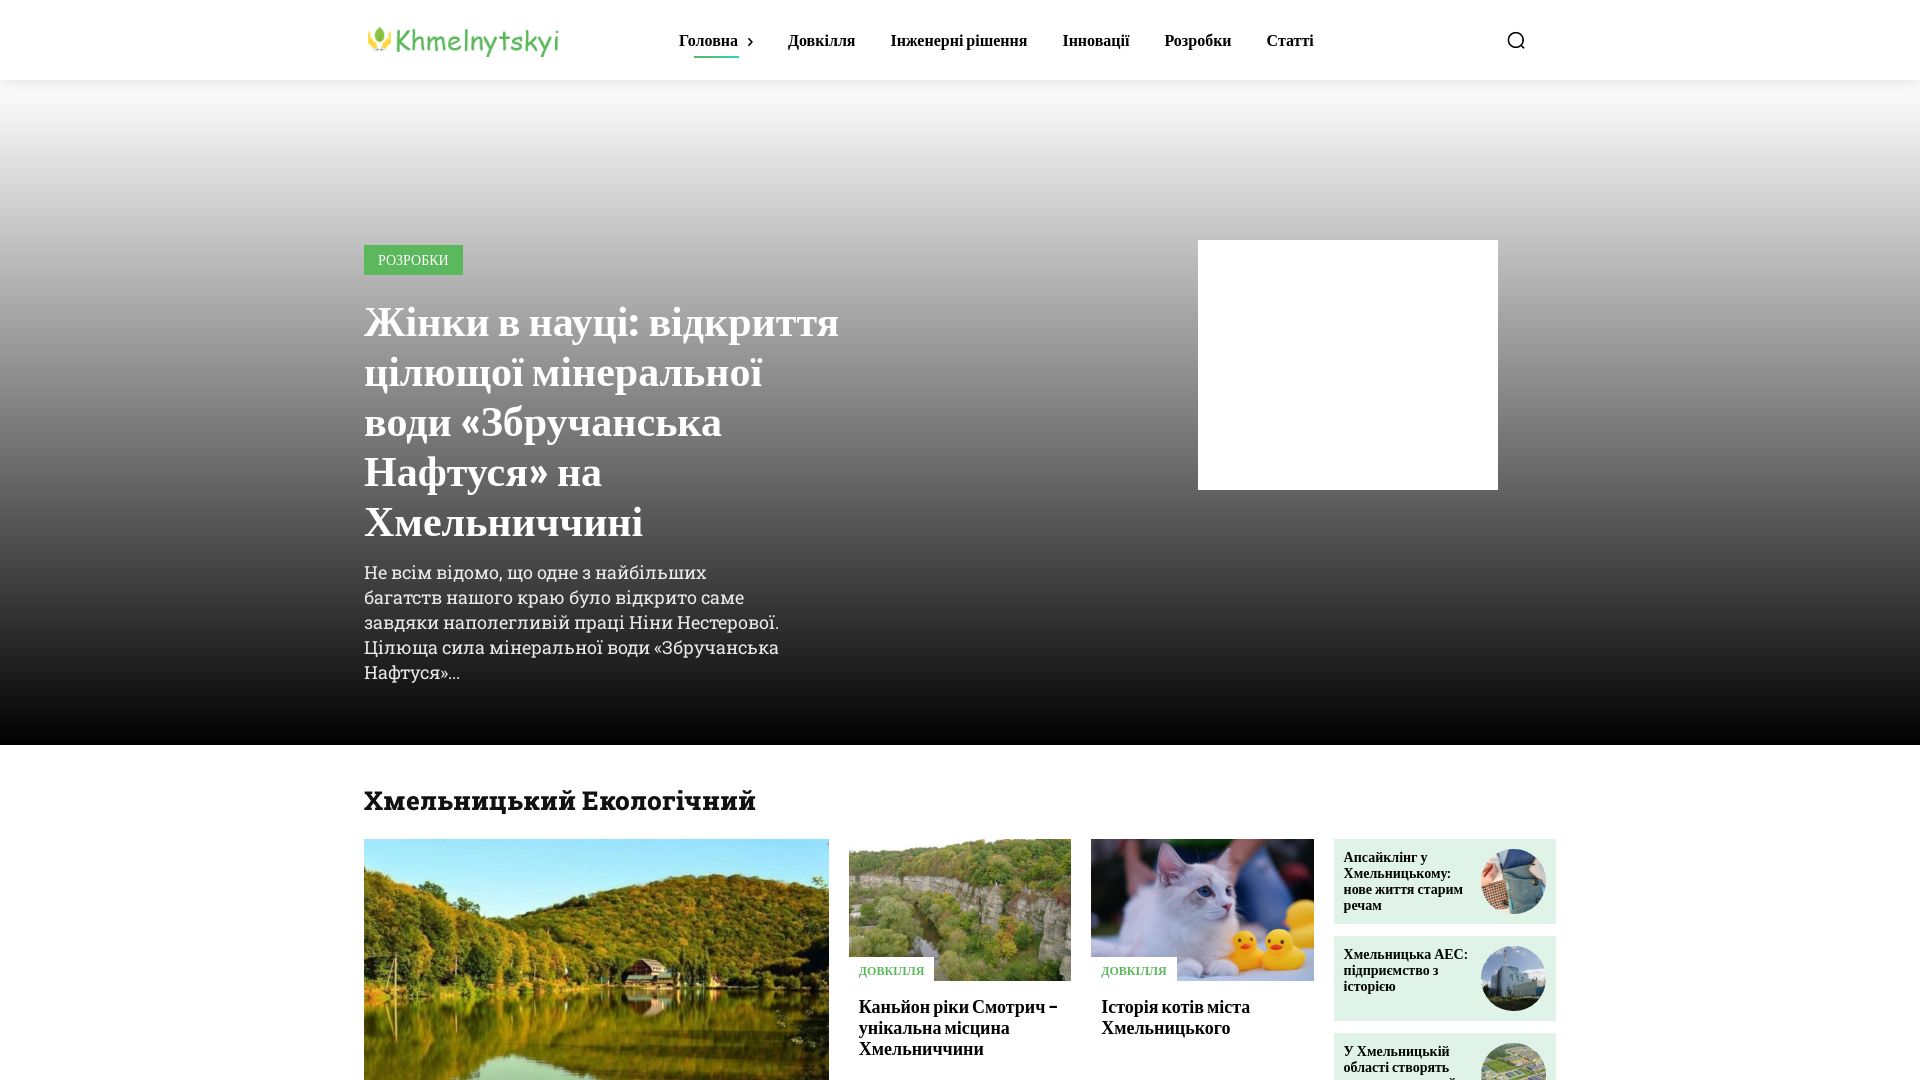 Website status khmelnytskyi.name is   ONLINE